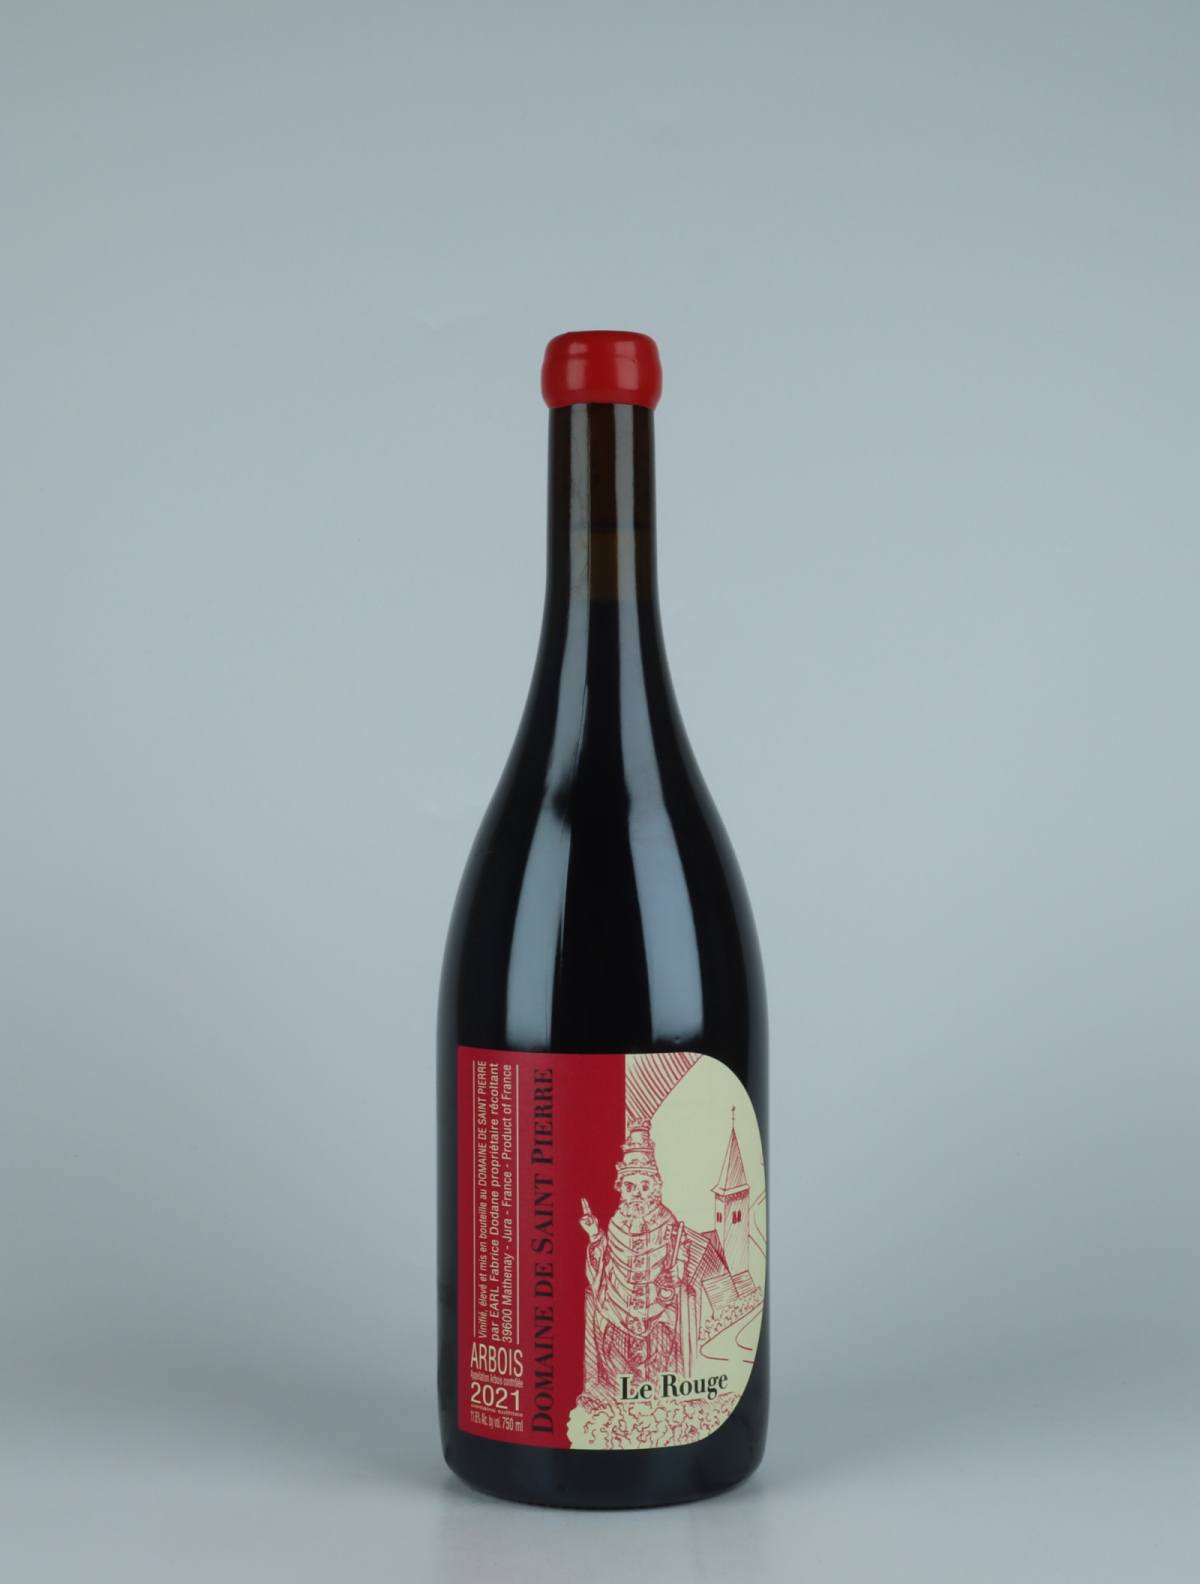 A bottle 2021 Arbois Rouge - Le Rouge Vin Red wine from Domaine de Saint Pierre, Jura in France